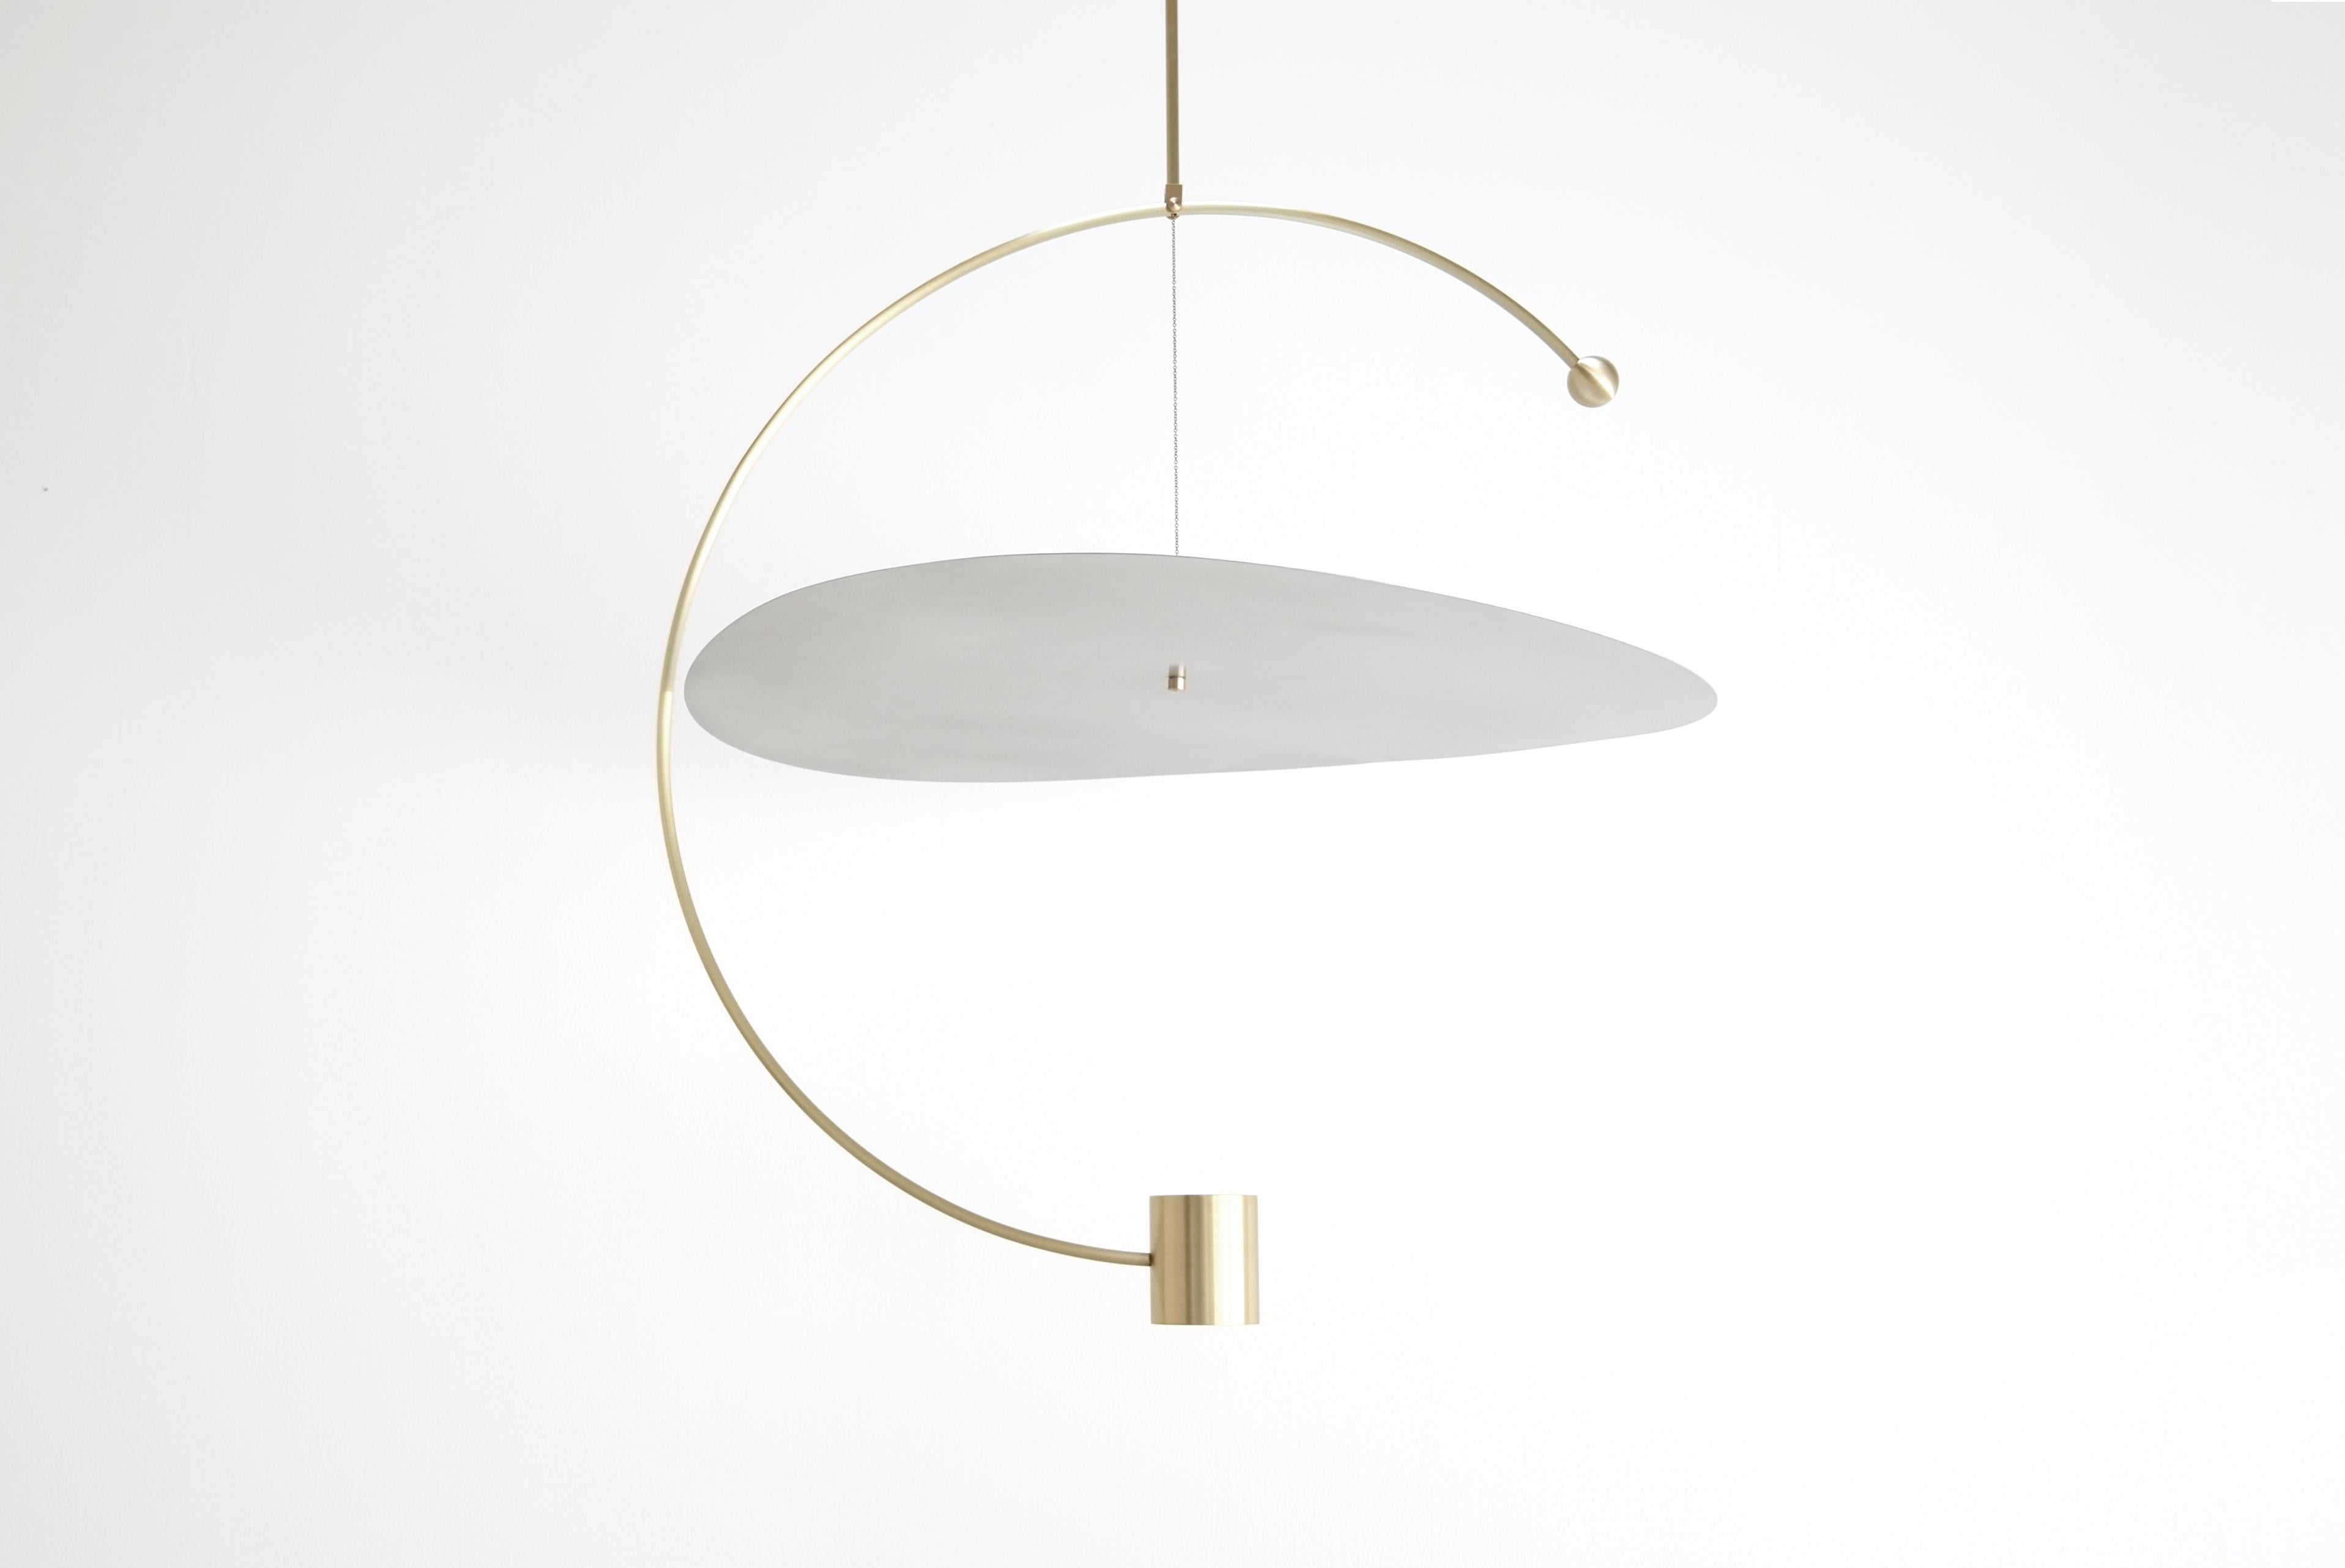 Float circle pendant light by Ladies & Gentlemen Studio
Dimensions: 31